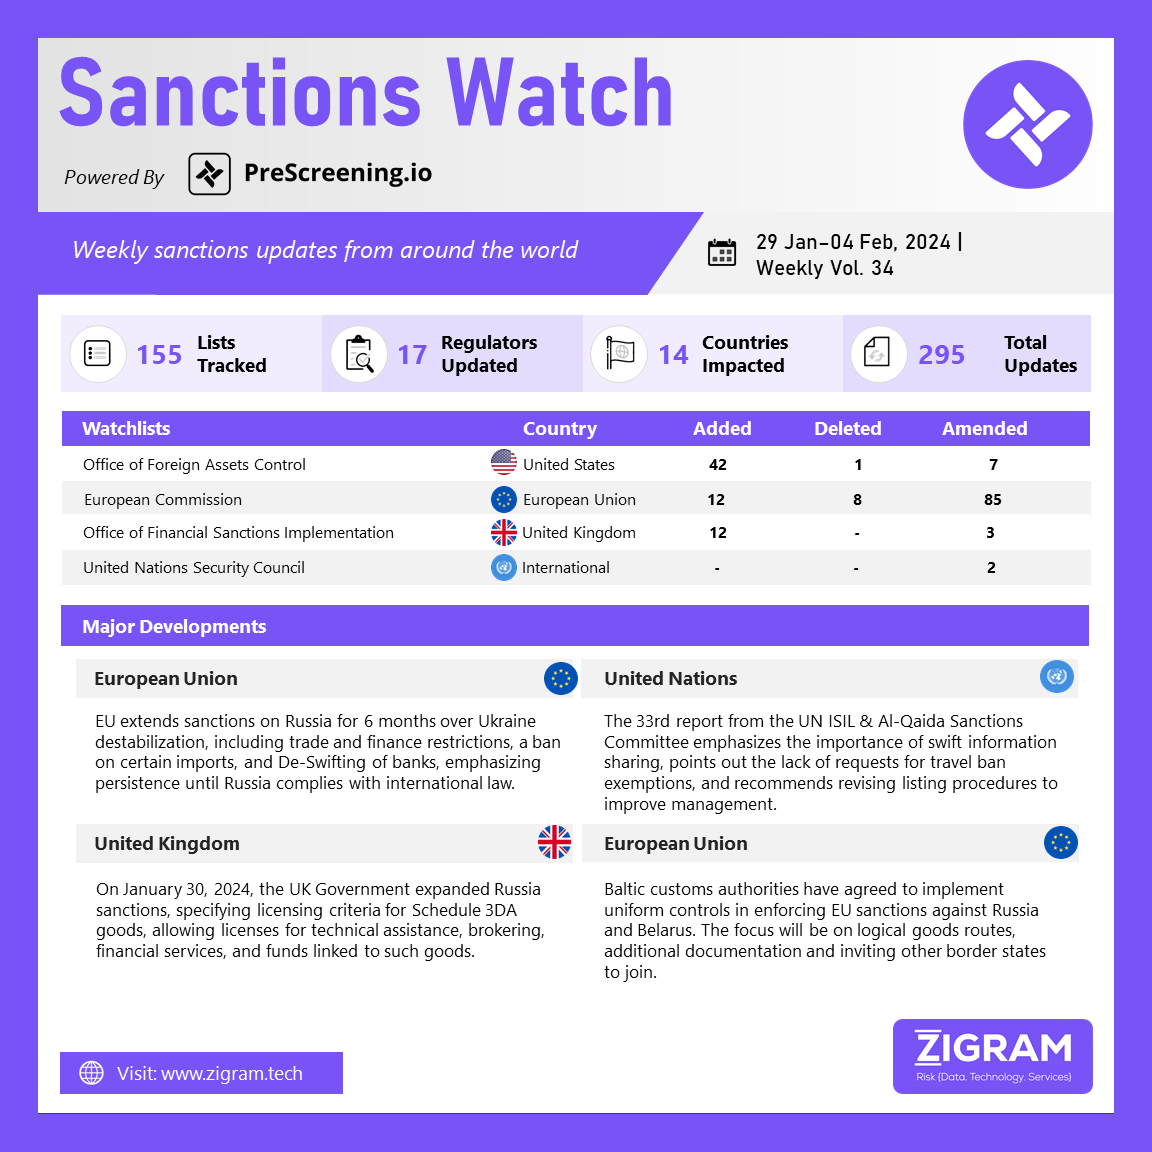 Sanctions Watch | Weekly Vol. 34
Powered By- Prescreening .io

To read more – tinyurl.com/4yya8ubb
Product Insights - prescreening.io

#EU #Russia #Ukraine #UN #ISIL #Al-Qaida #Estonia #BalticCountries #SanctionsWatch #EconomicSanctions